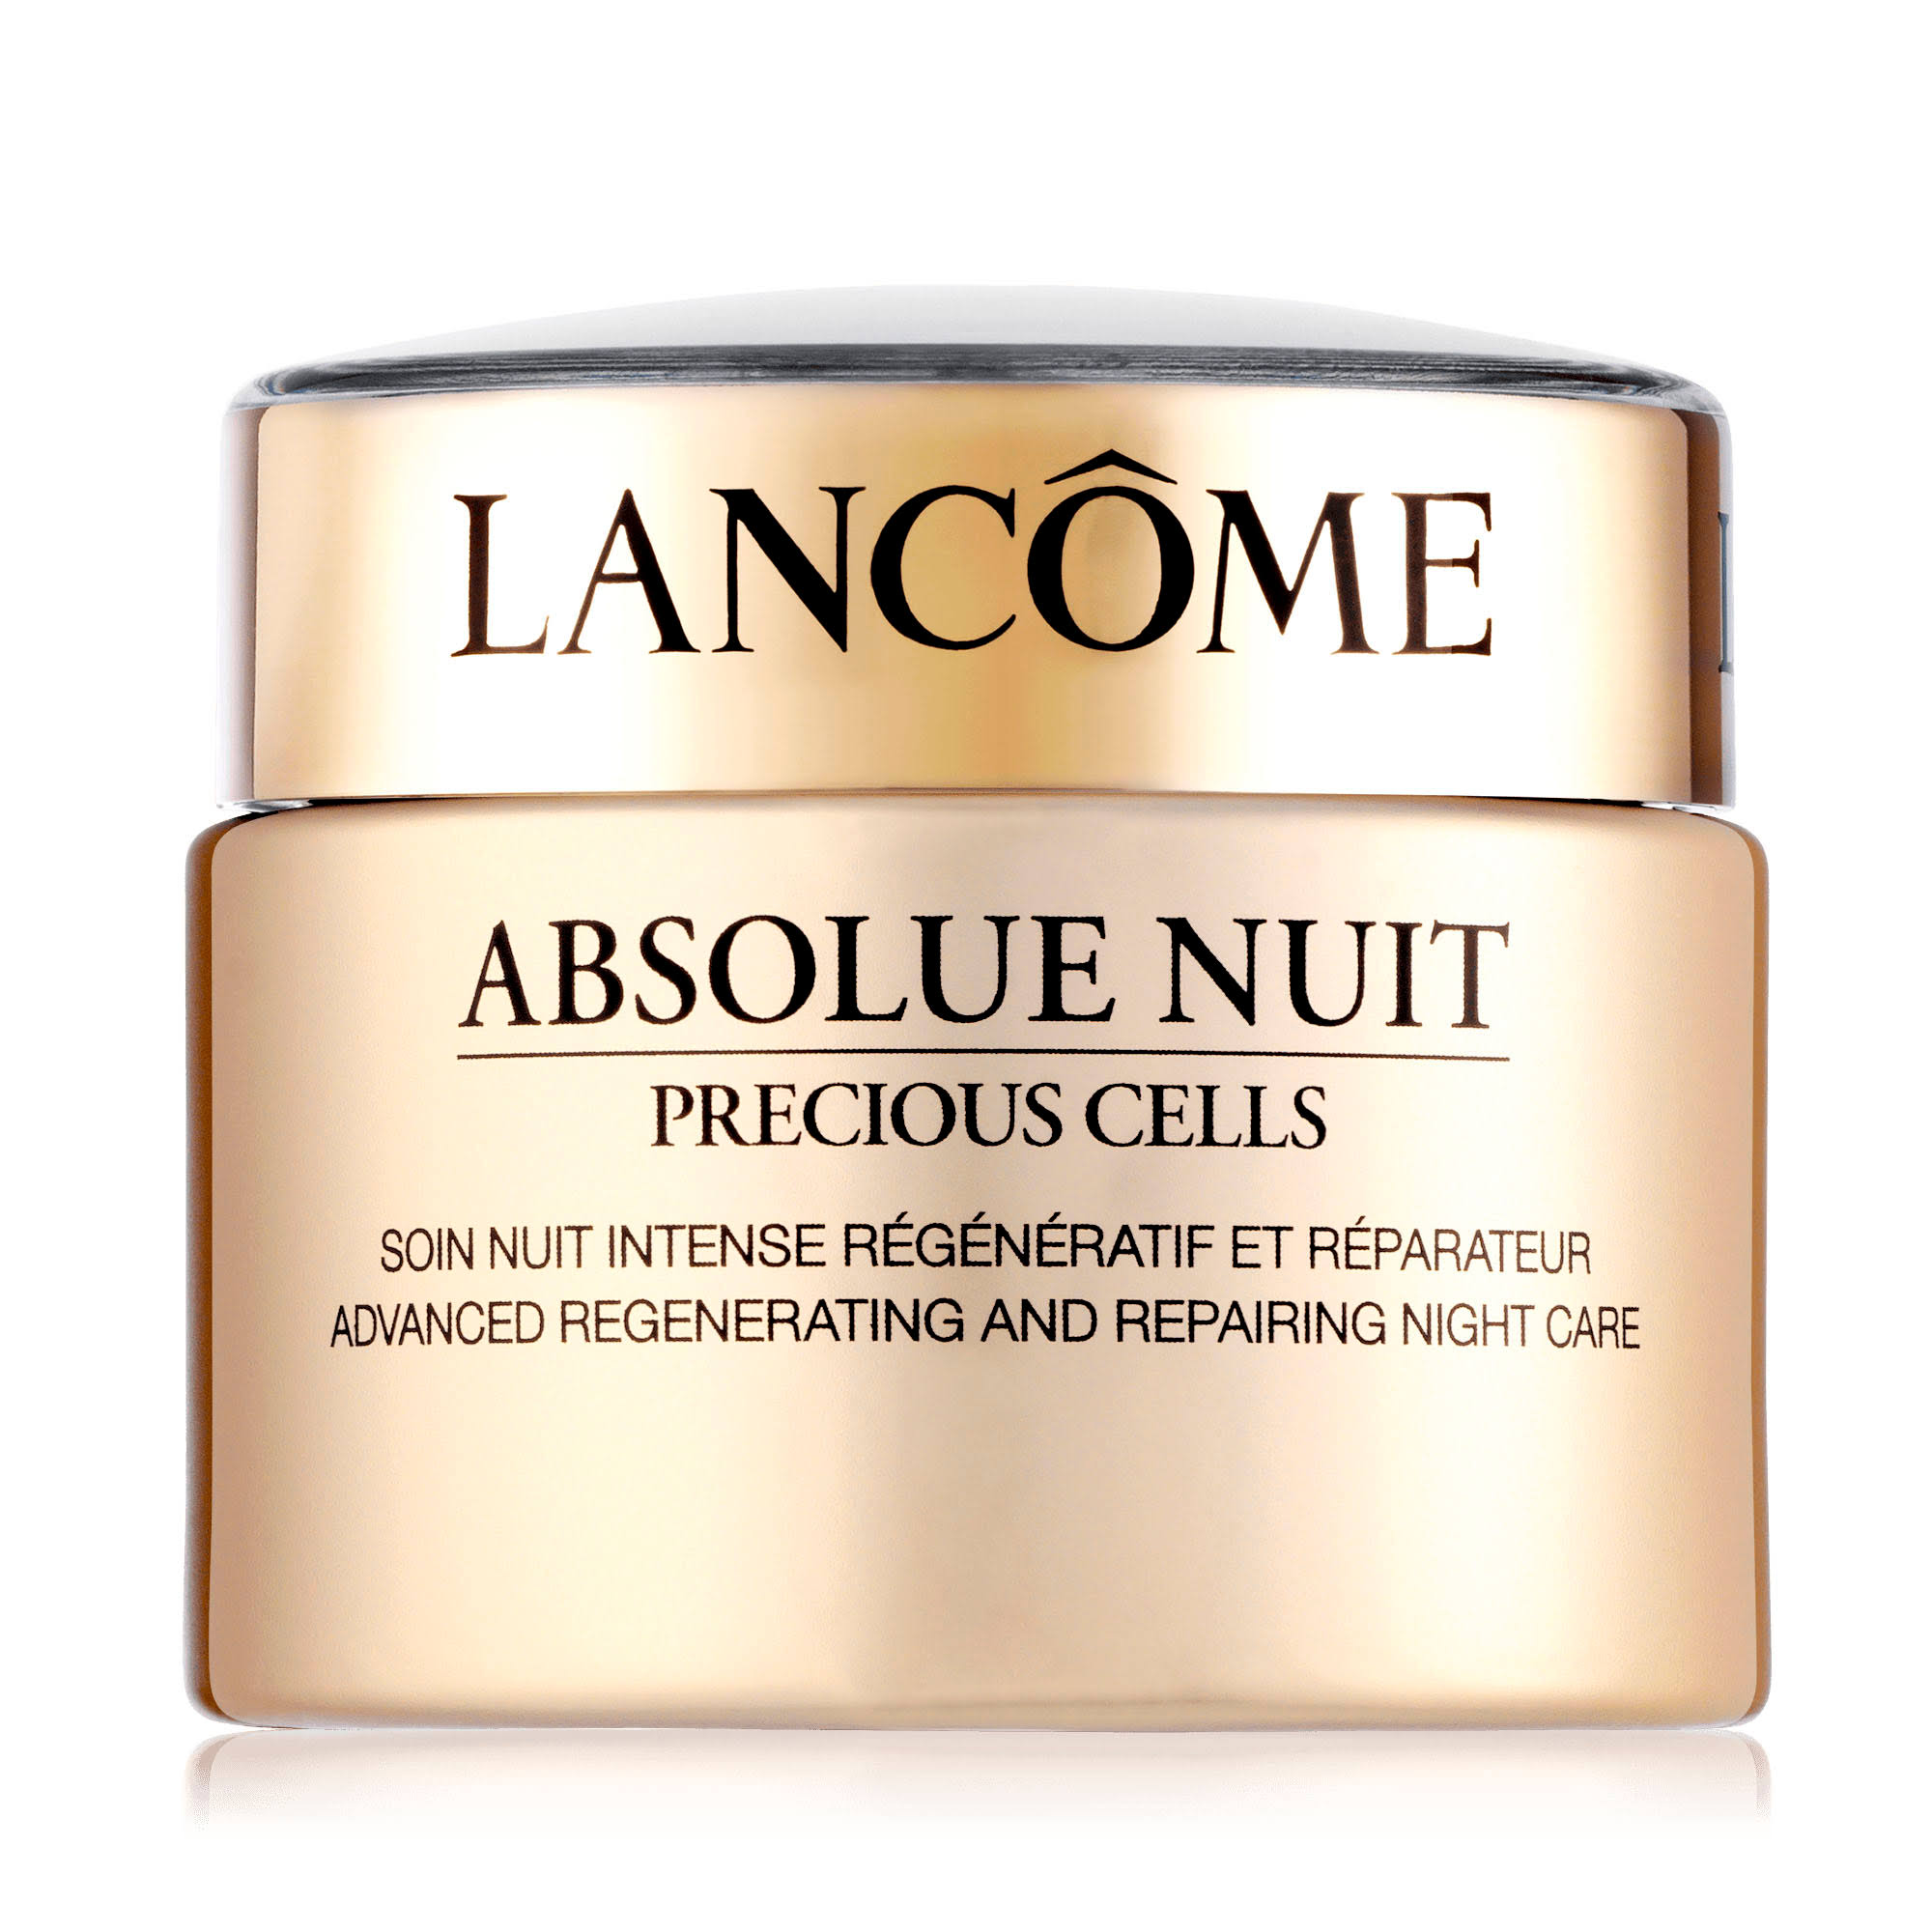 Lancome Absolue Nuit Precious Cells Night Cream - 50ml